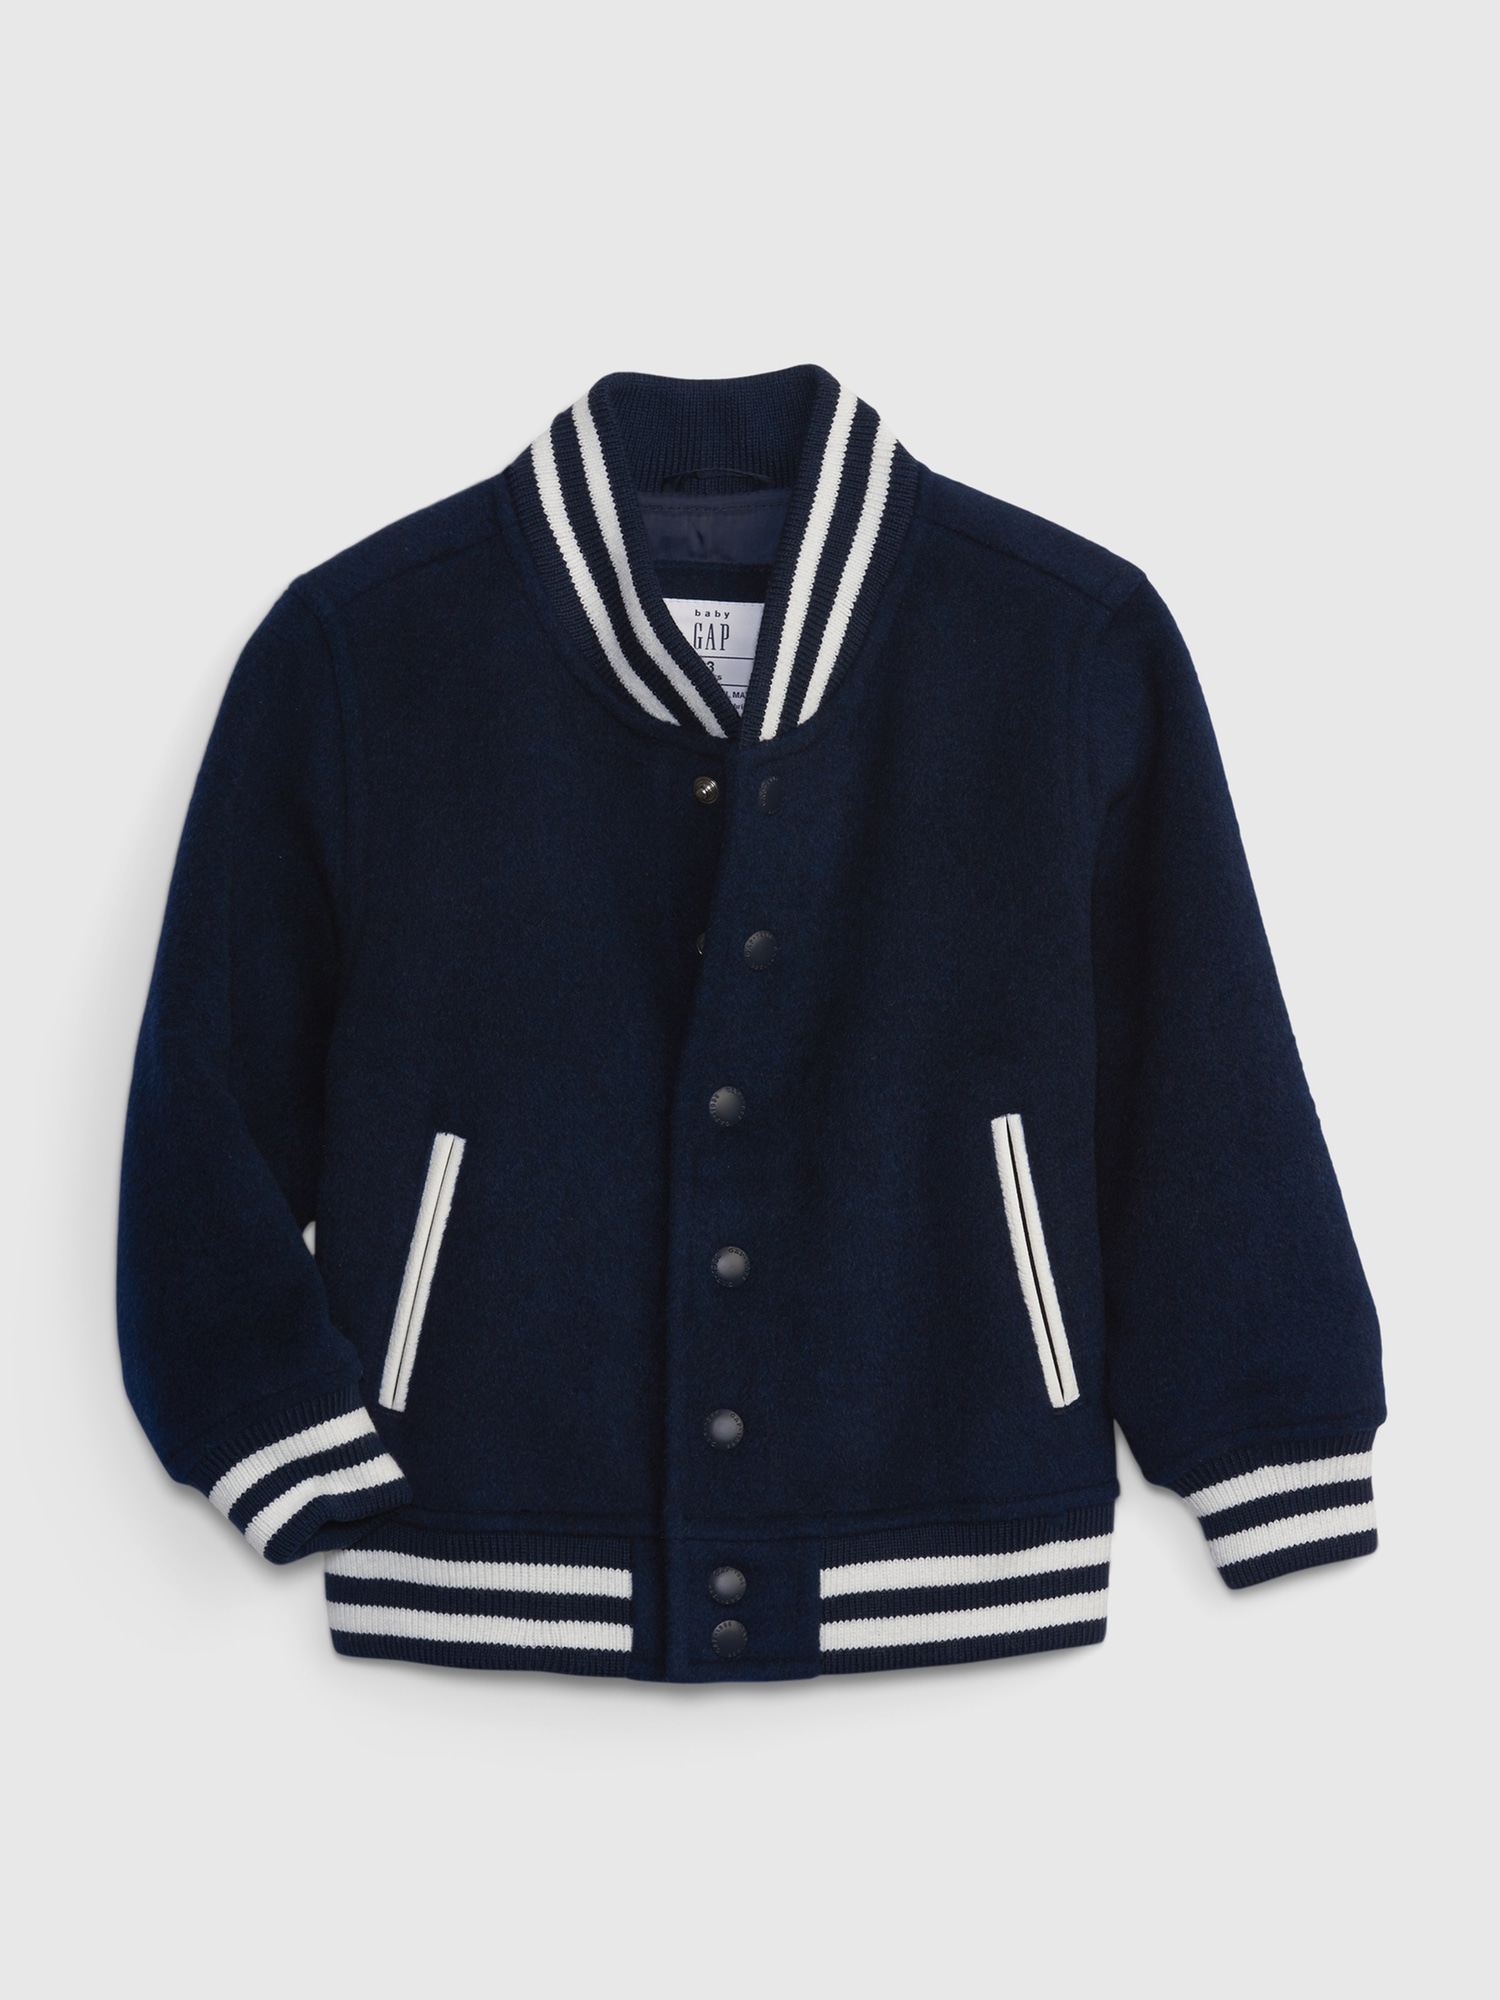 Toddler Varsity Jacket | Gap